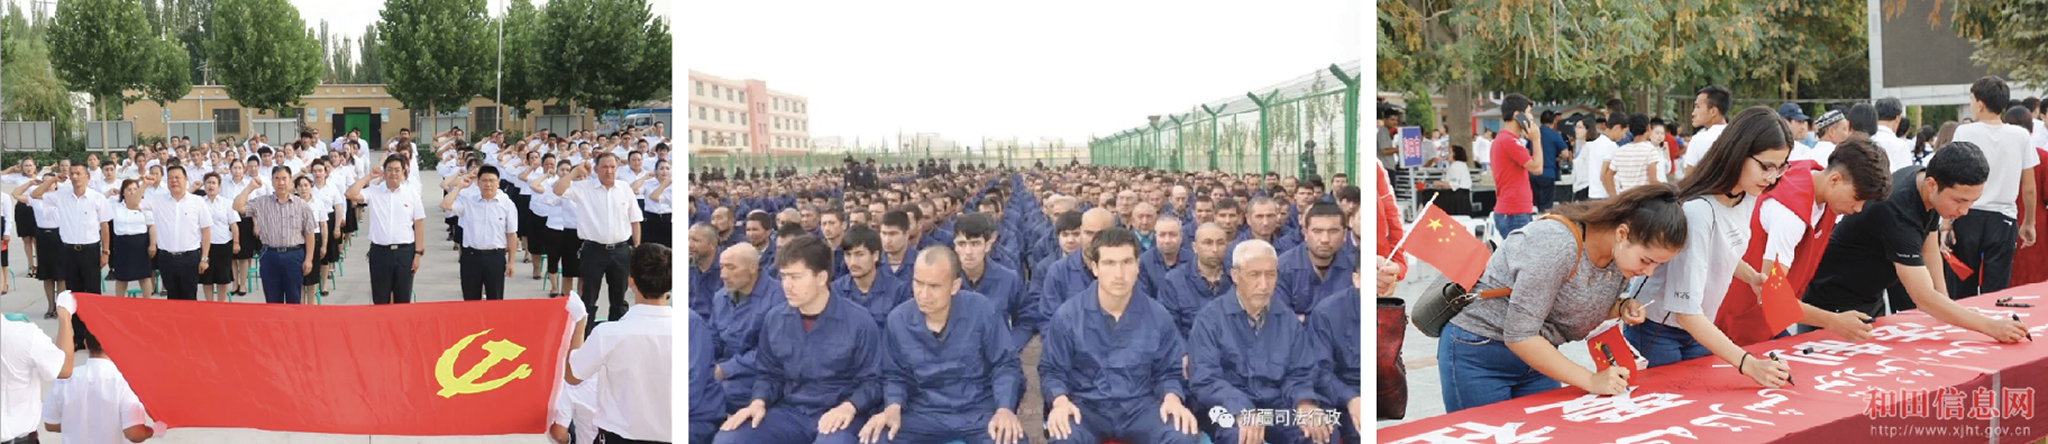 Xinjiang | Human Rights Watch denuncia campanha repressiva de Pequim